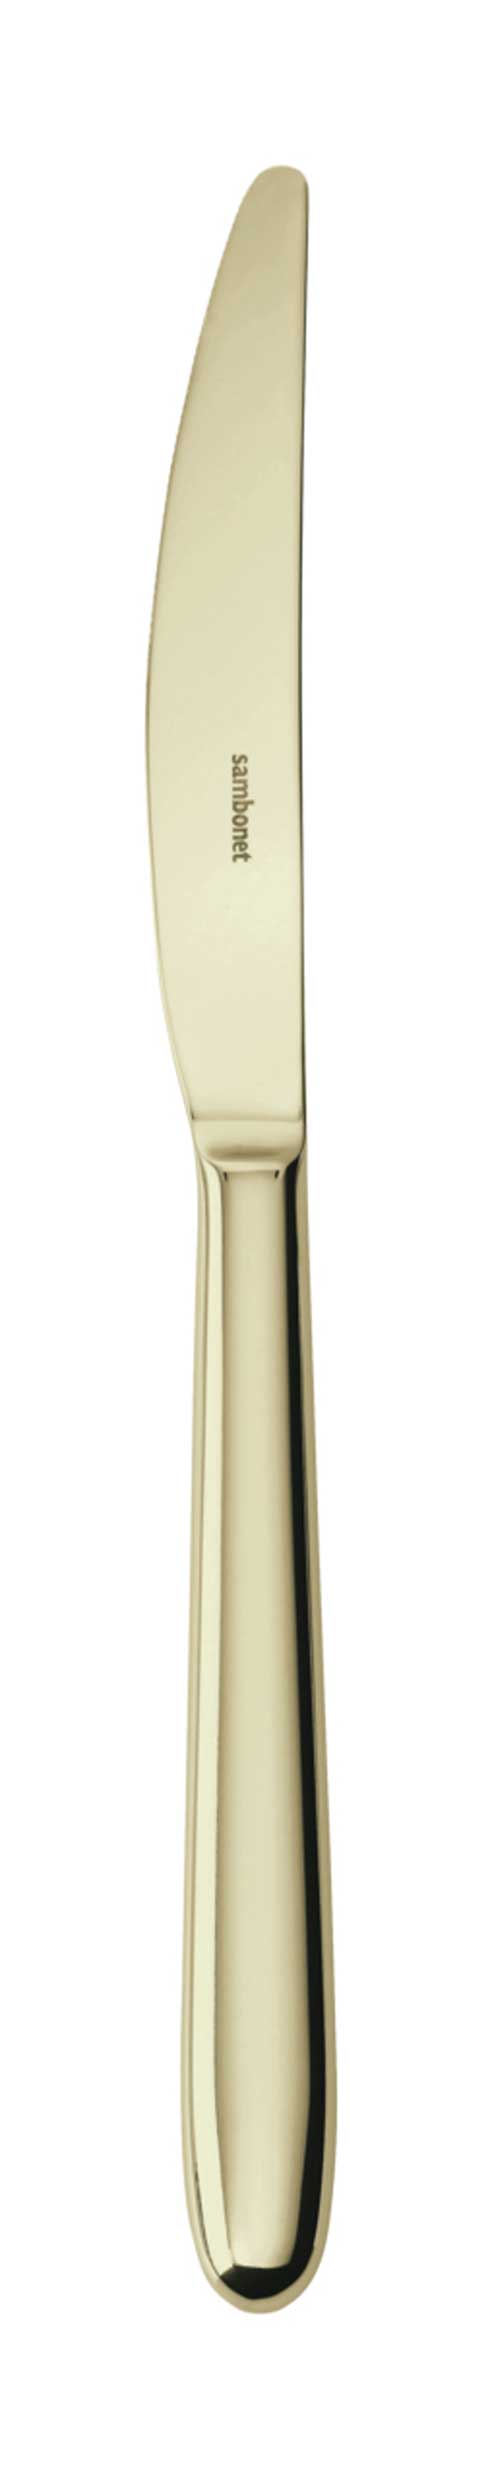 $43.00 Champagne - Dessert Knife SH 18/10 s/s - PVD Champagne